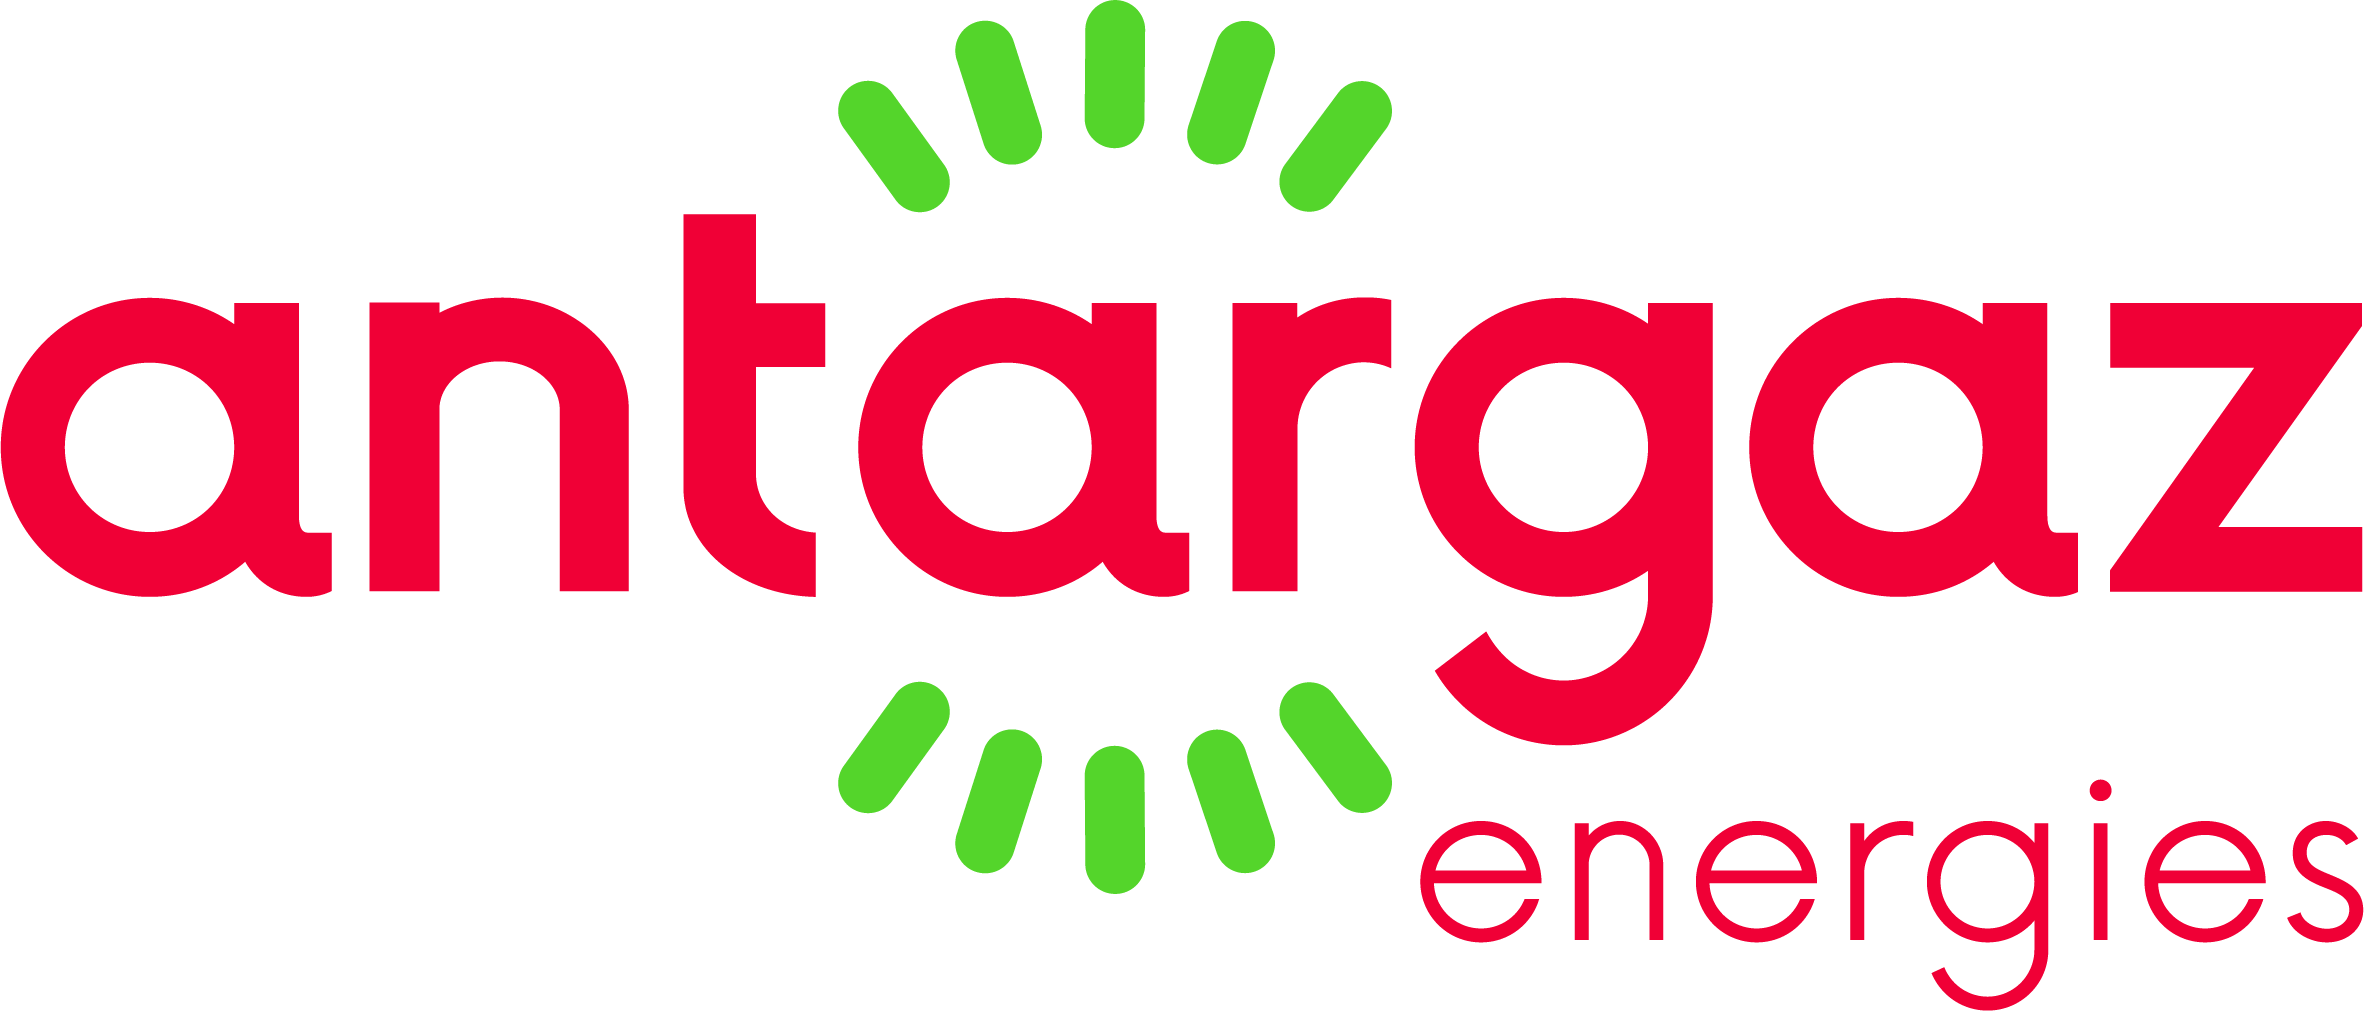 Logo Antargaz